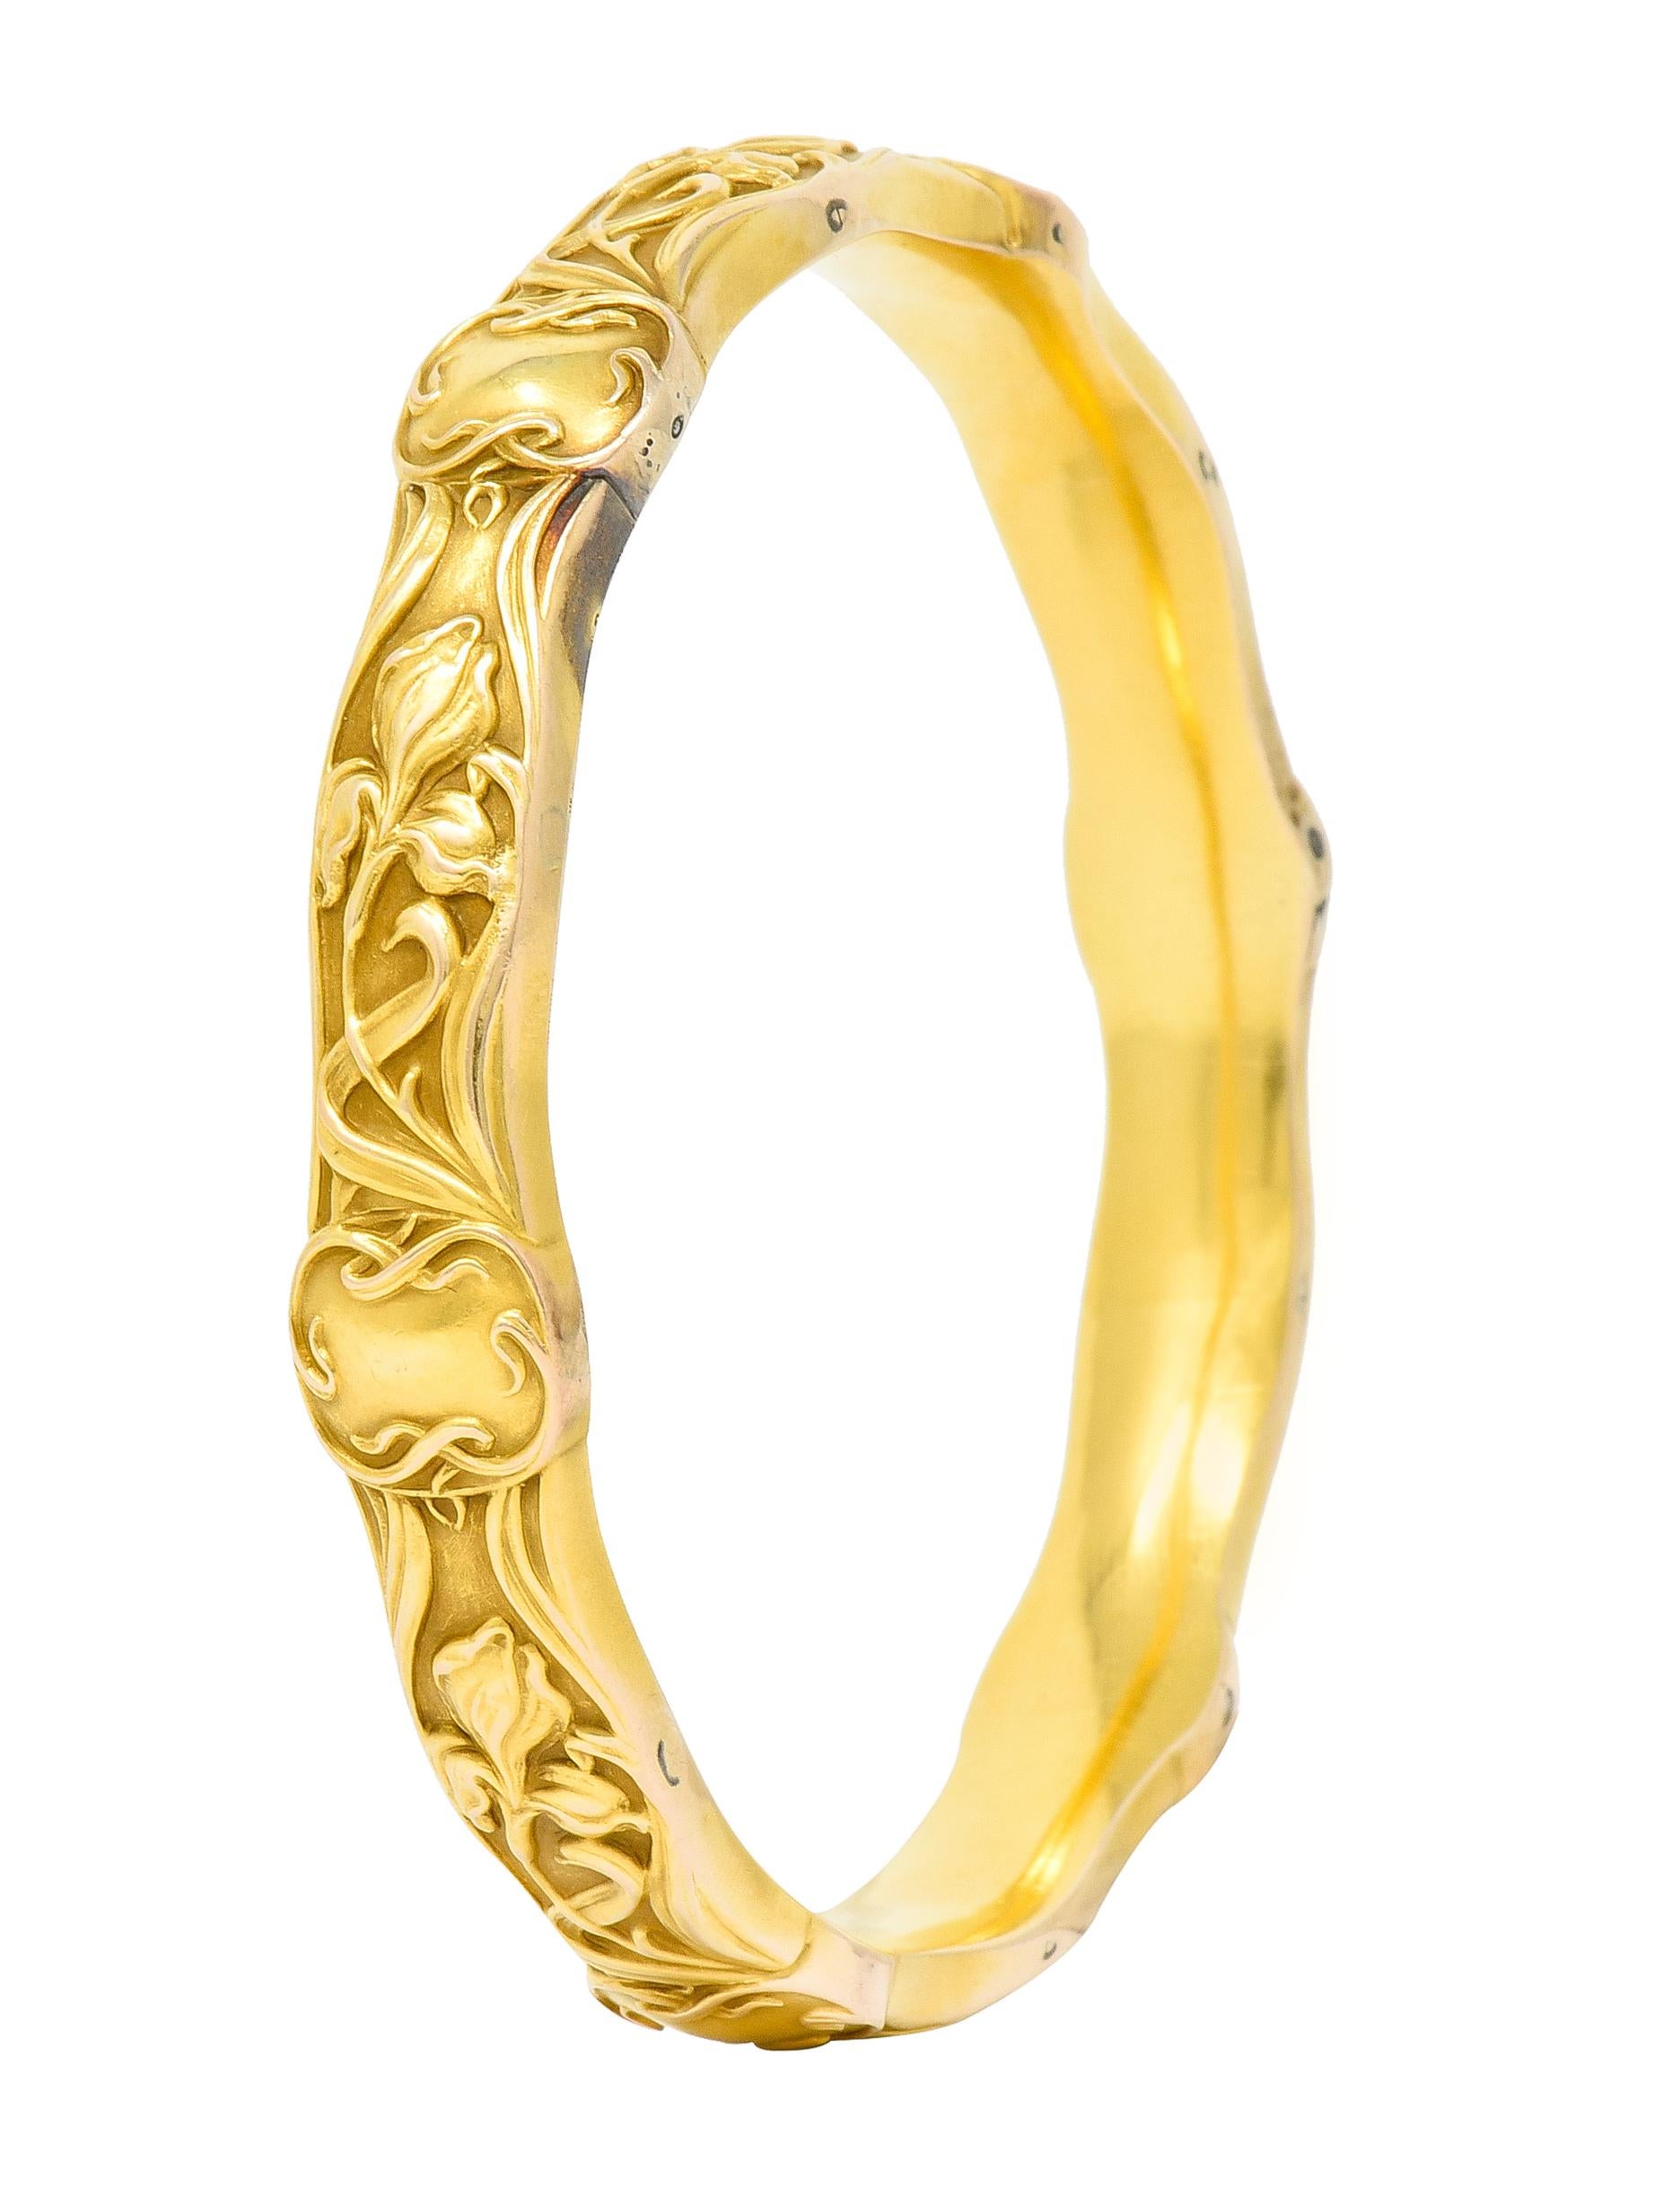 Riker Brothers Art Nouveau 14 Karat Gold Iris Flower Bangle Bracelet 1